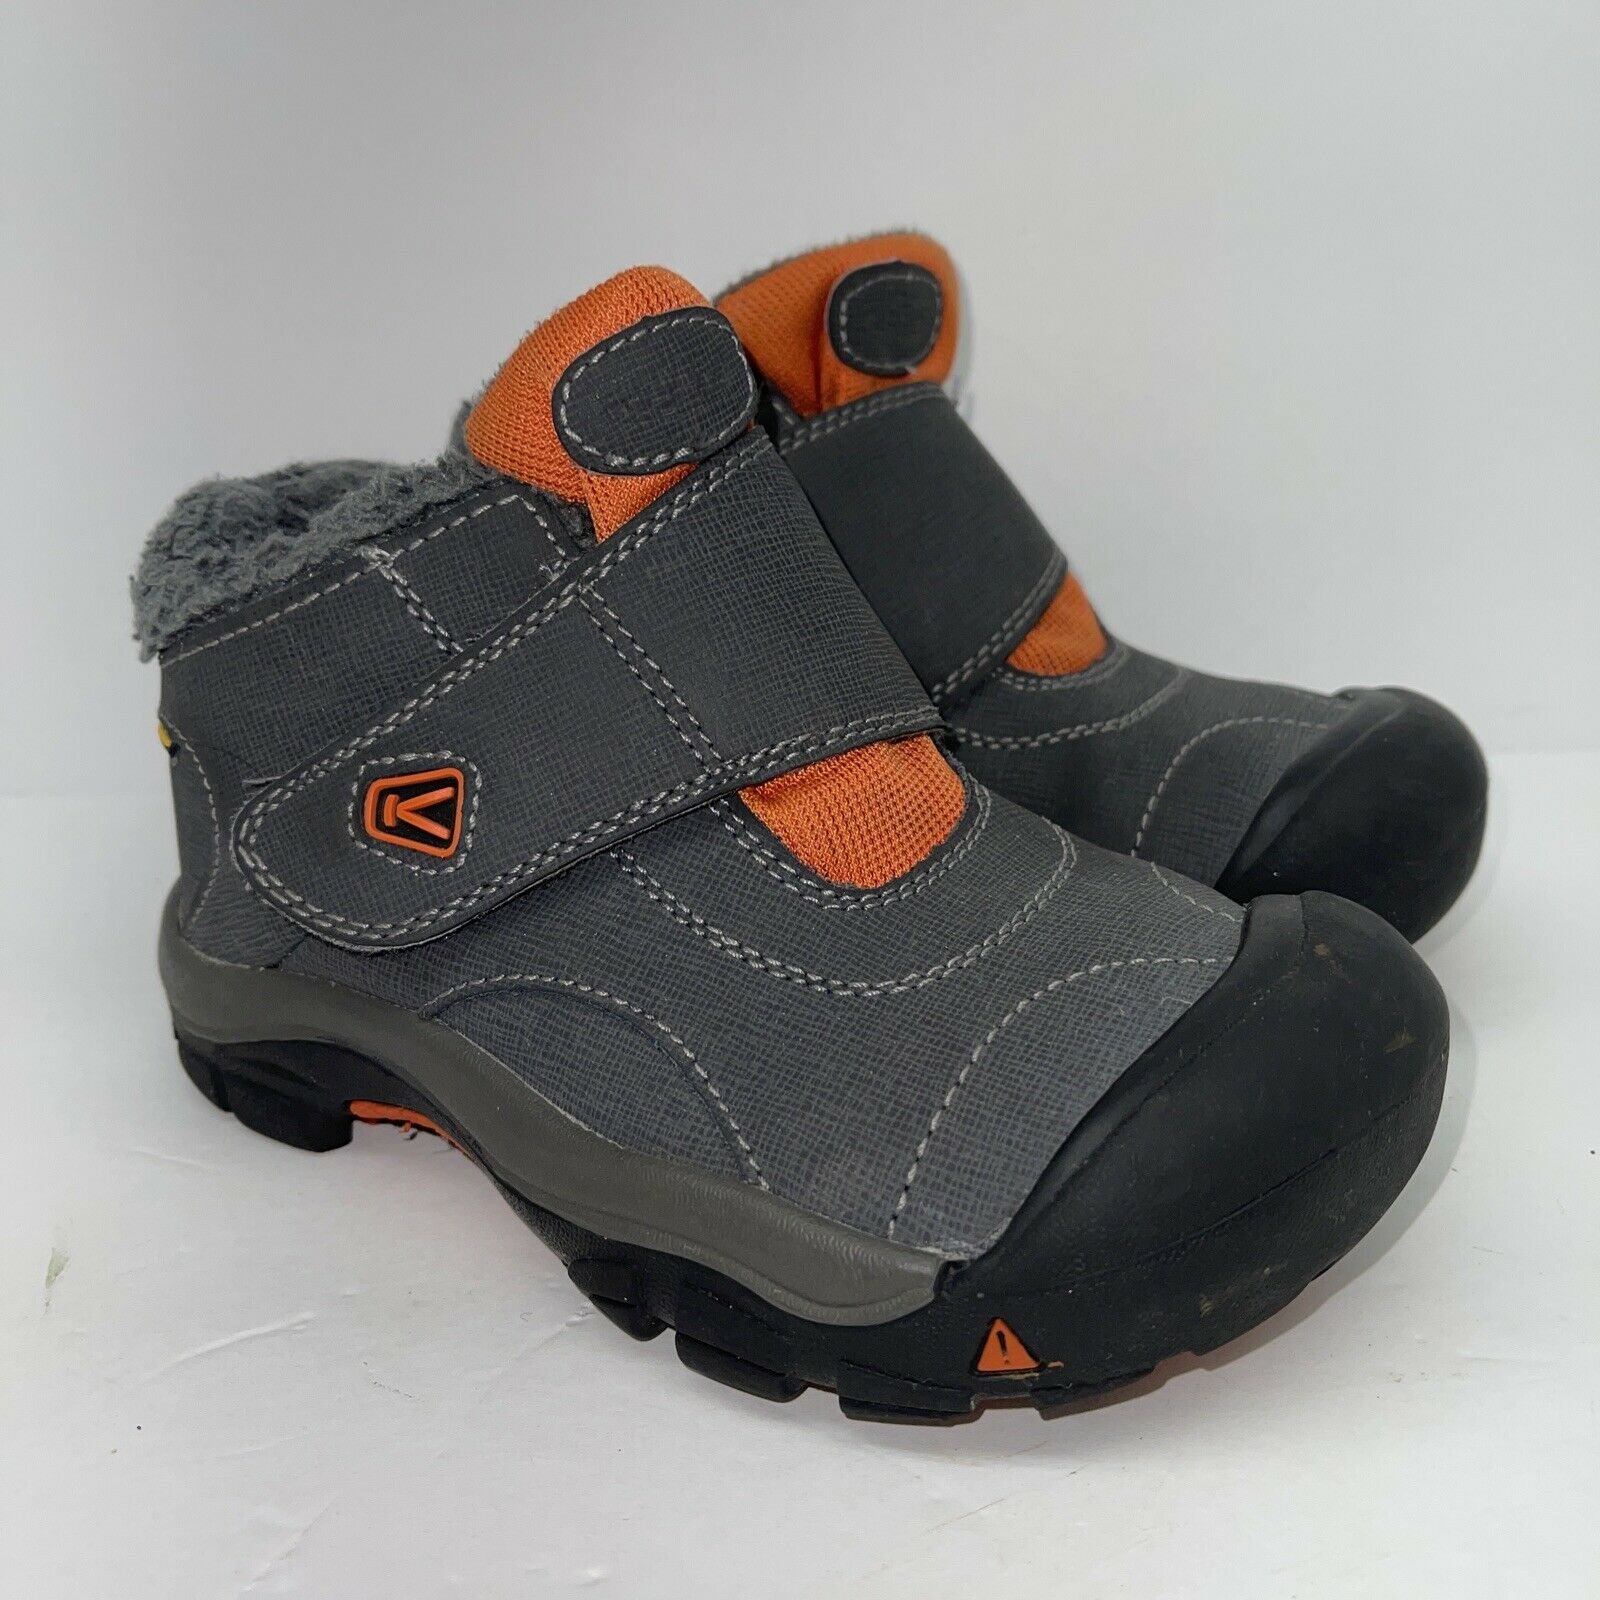 Keen Kootenay Kids Youth Size 12 EU 30 Gray Leather & Orange Winter Hiking Boots